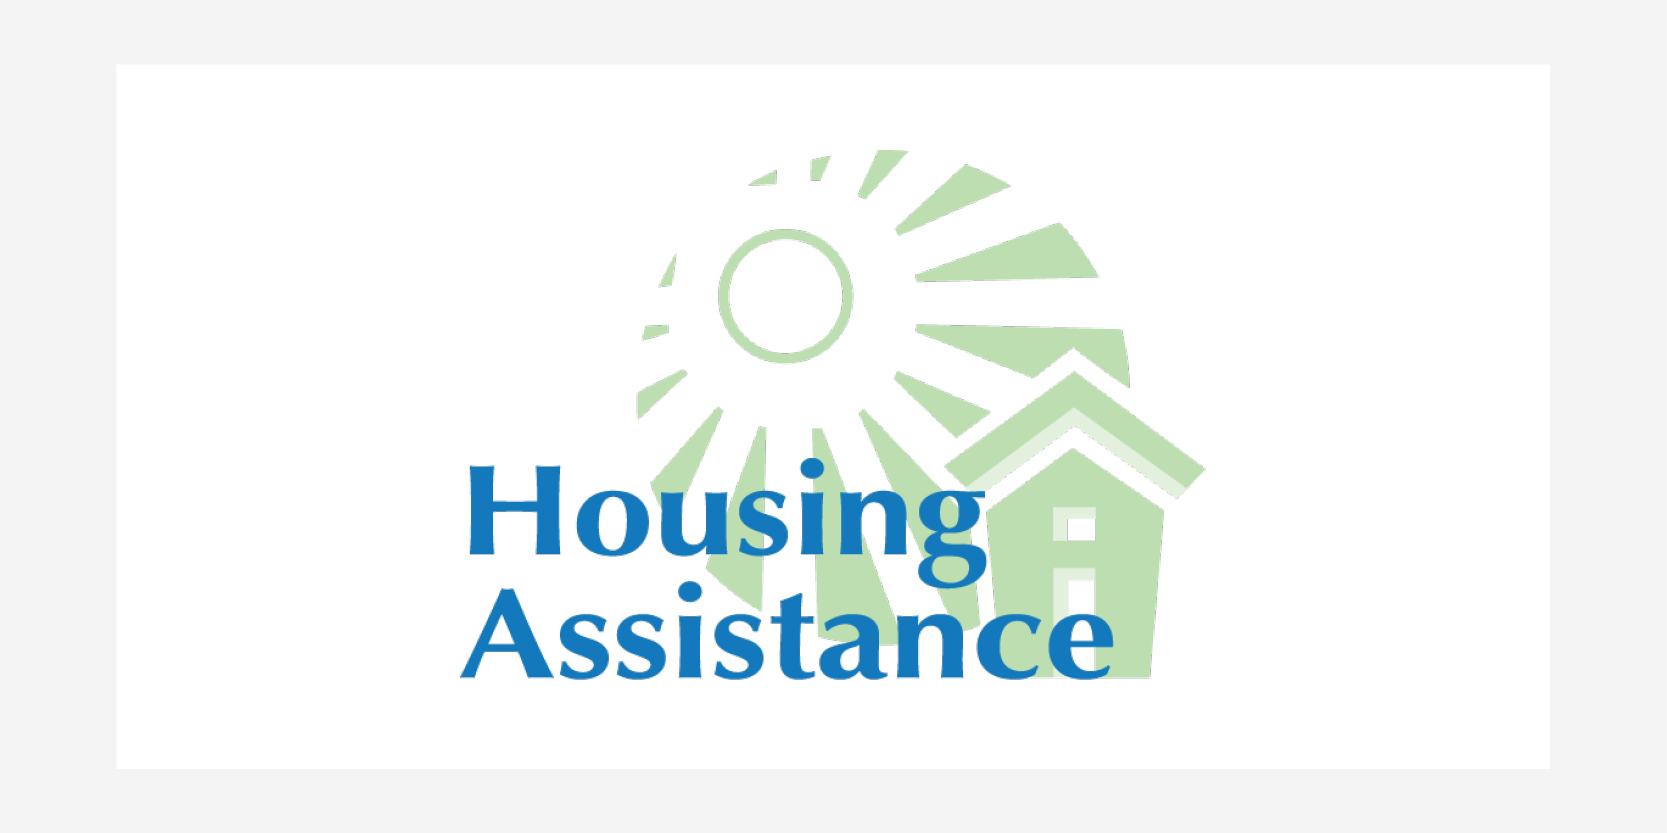  Housing Assistance Corporation logo